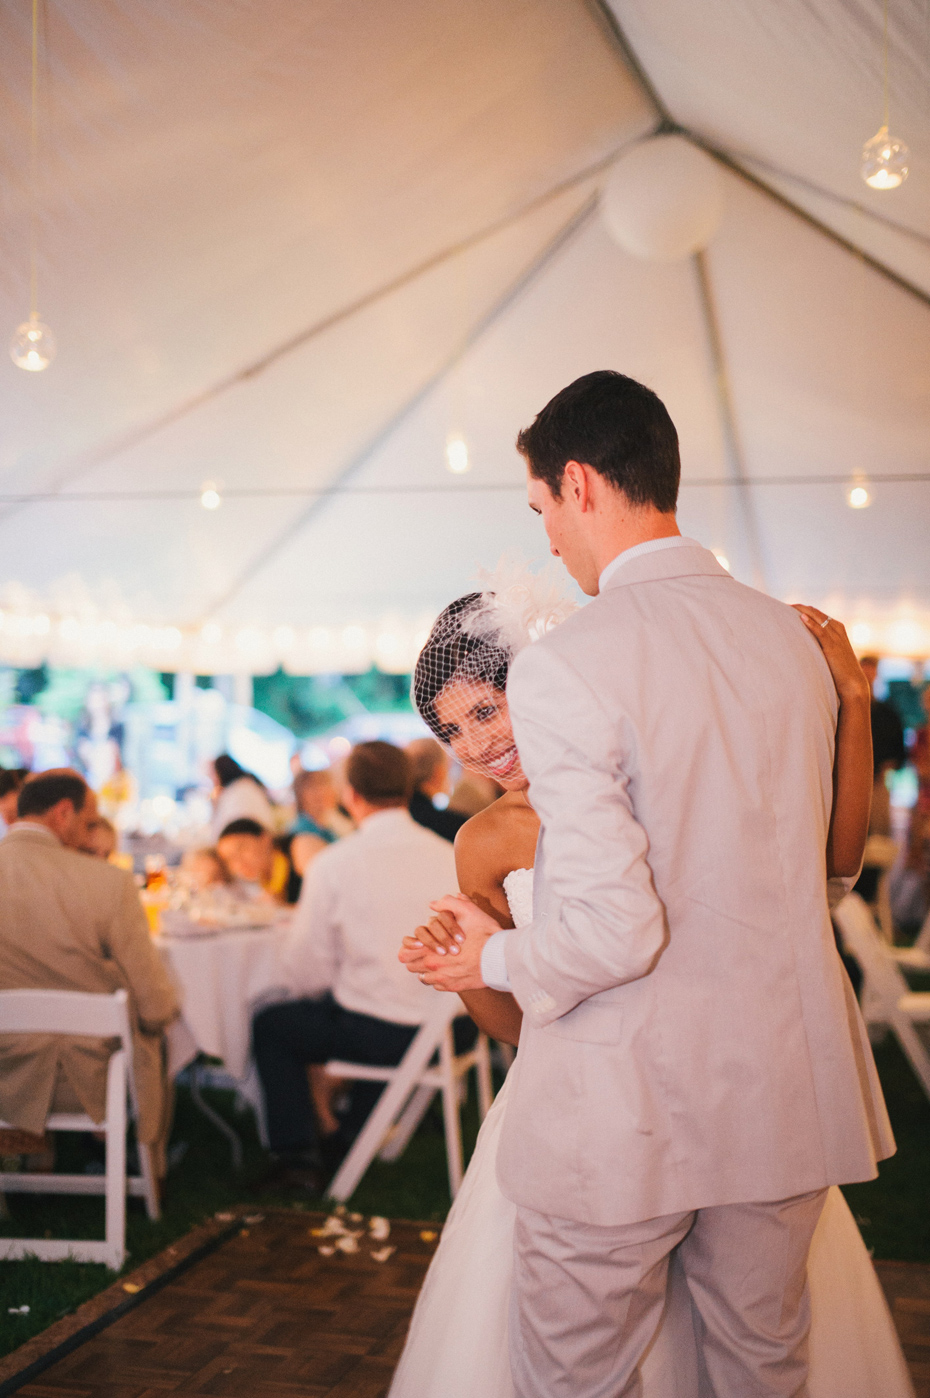 The bride and groom share their first dance at a backyard wedding reception in Kalamazoo Michigan, by Ann Arbor Wedding Photographer Heather Jowett.